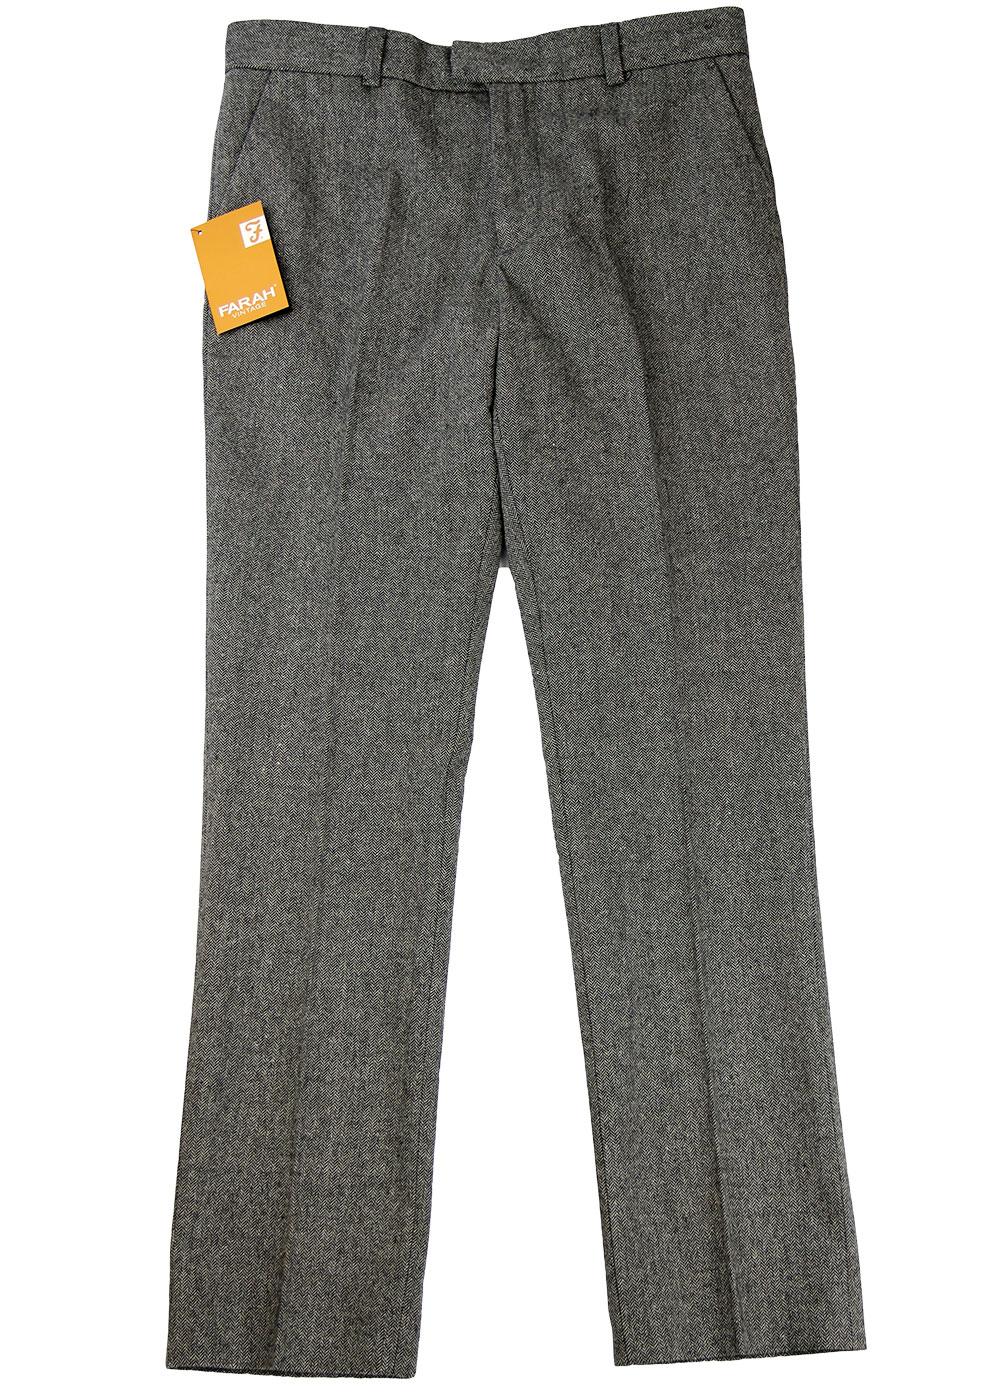 Farah Men's Twill Trousers (Size 48W 31L) Soft Touch Smart Suit Trousers -  New | eBay